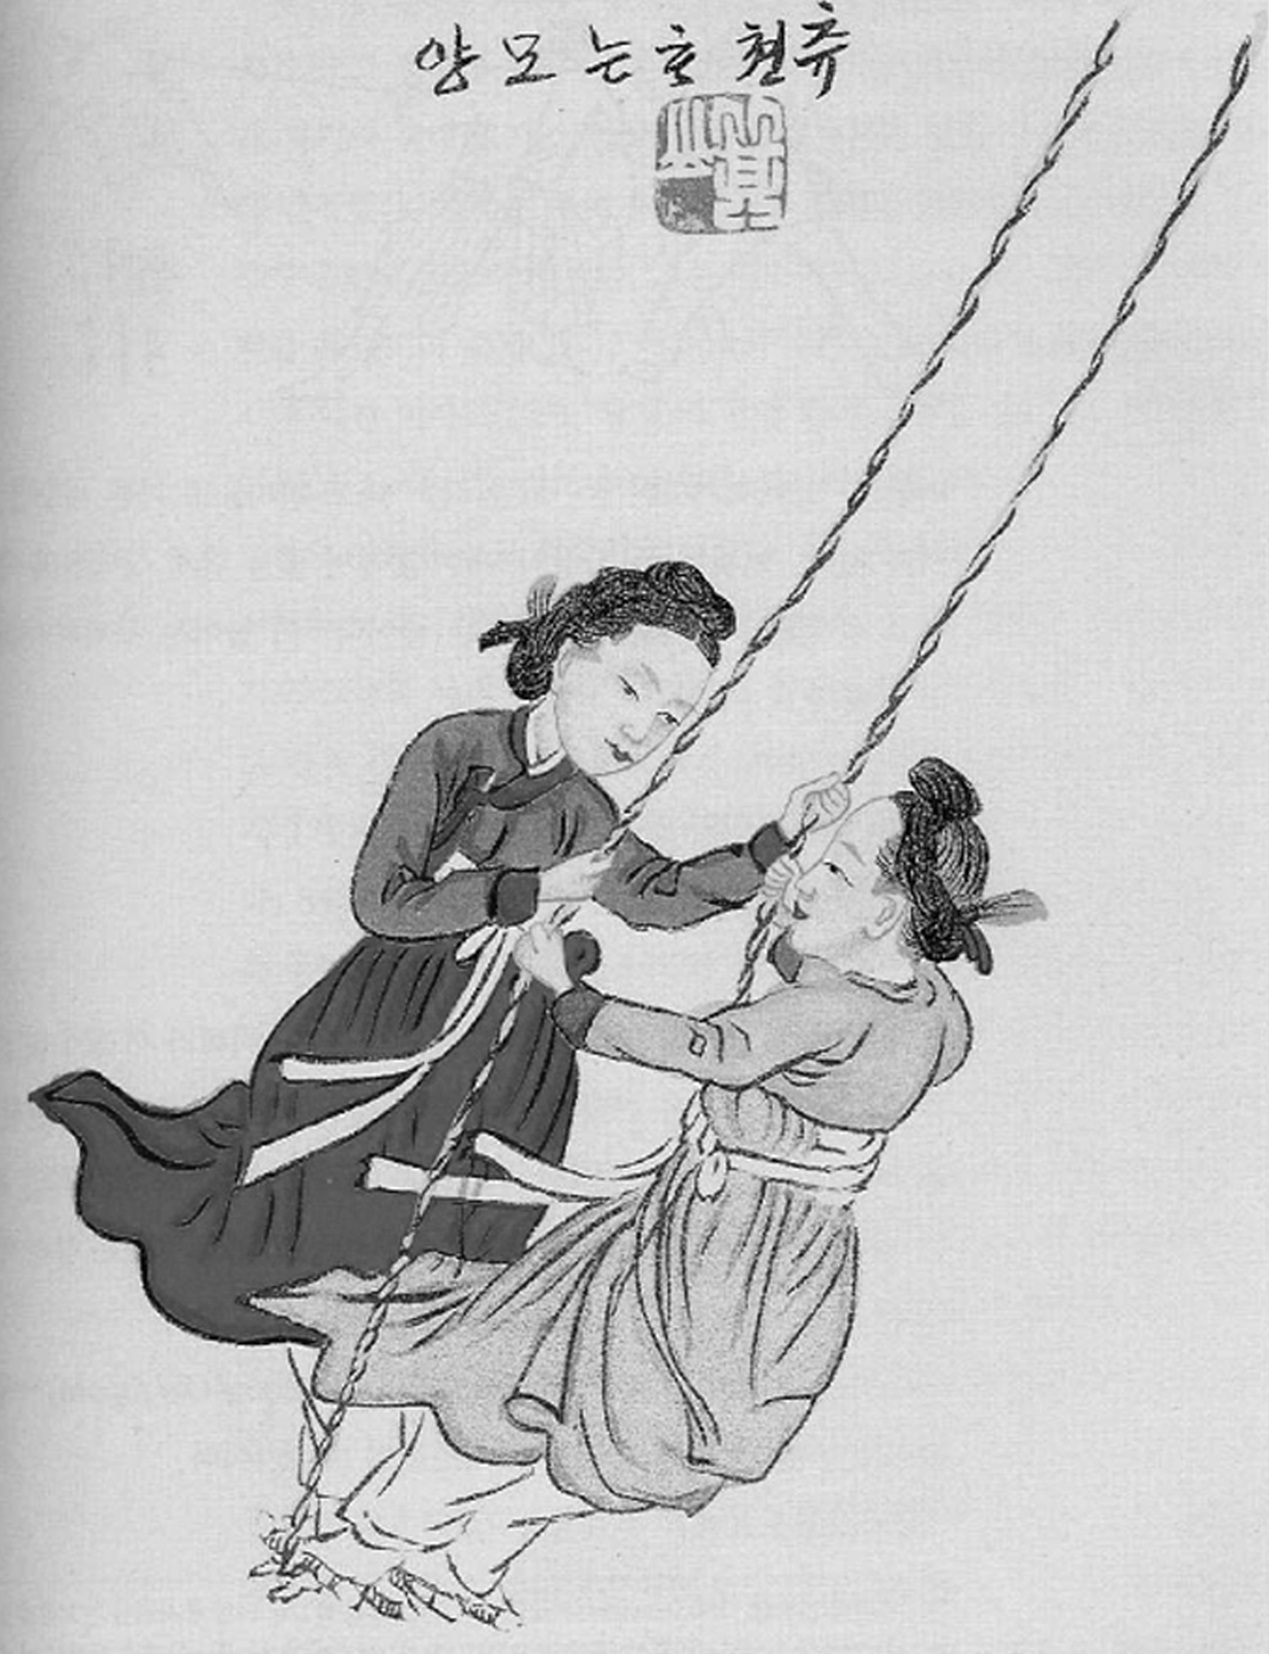 Swing game (Korean Games p. 89, Fig. 83).